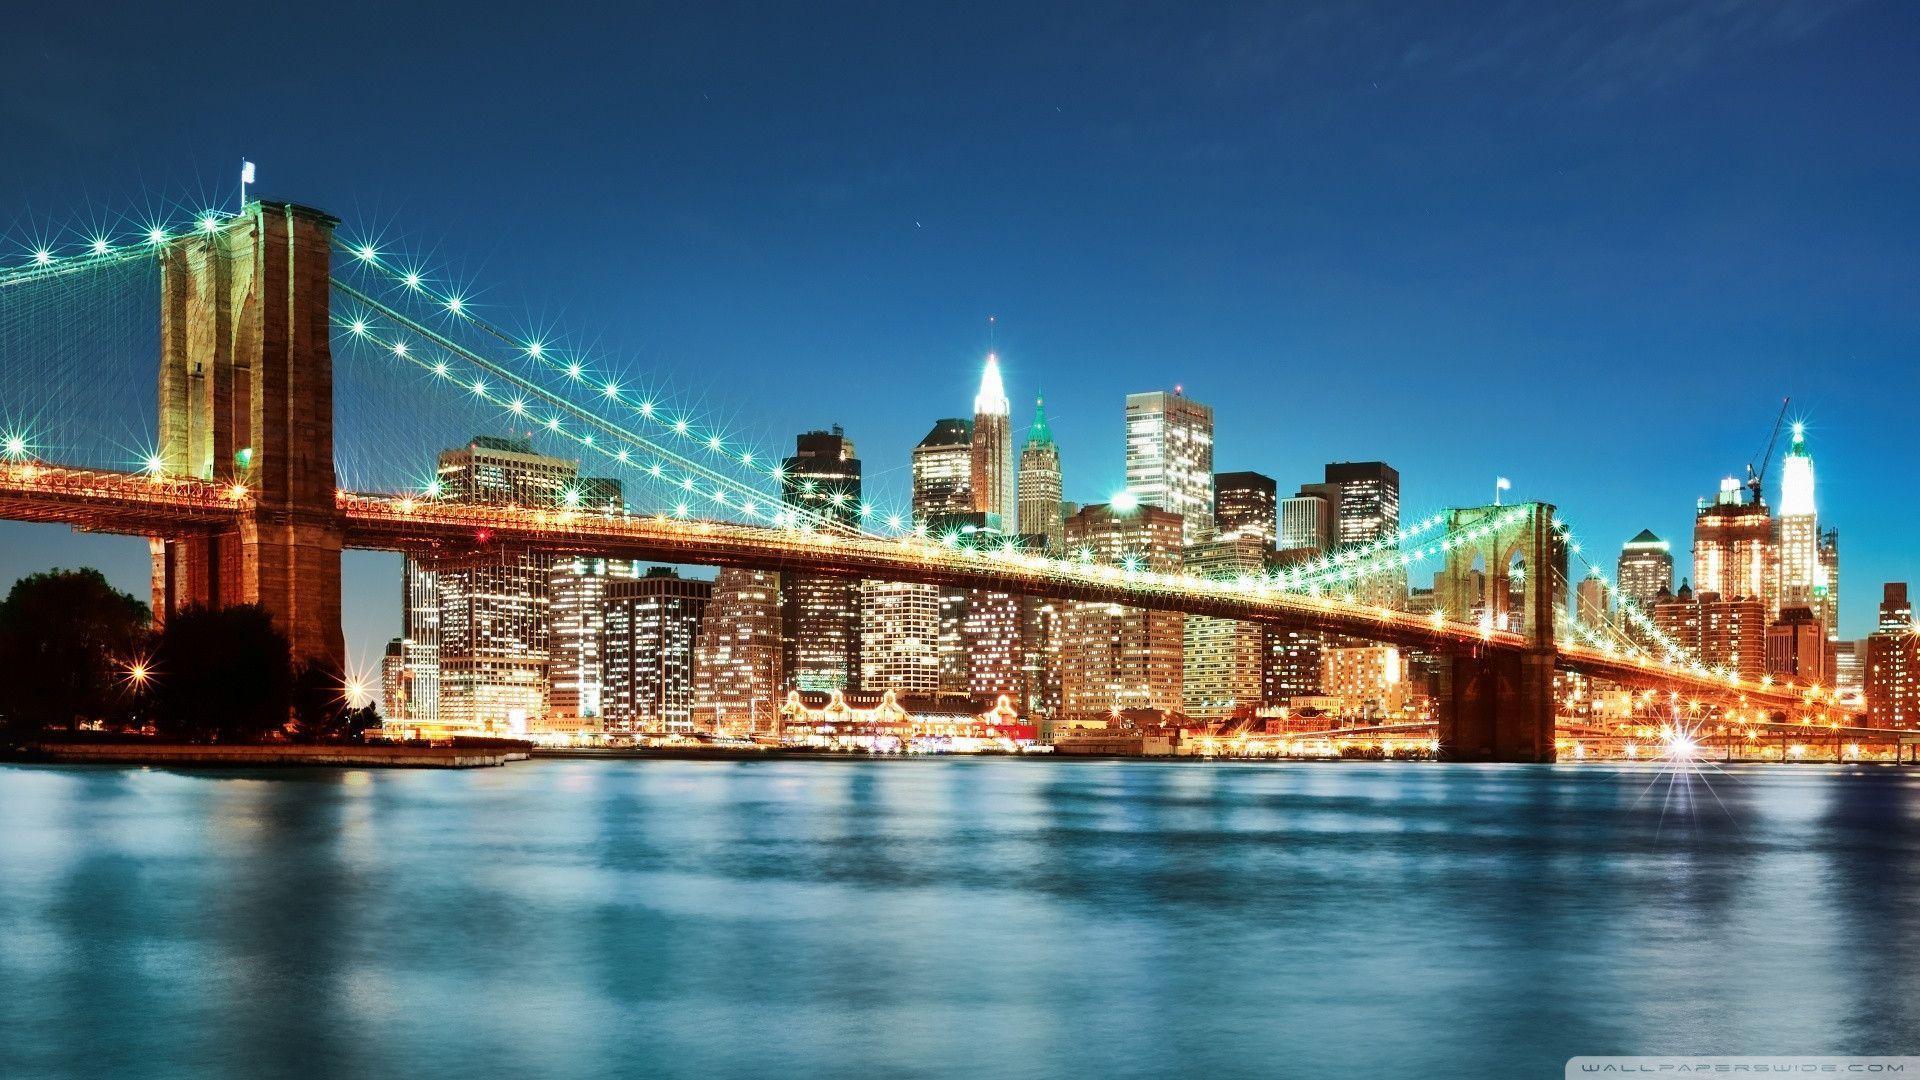 Download New York City Night Lights Wallpaper 1920x1080